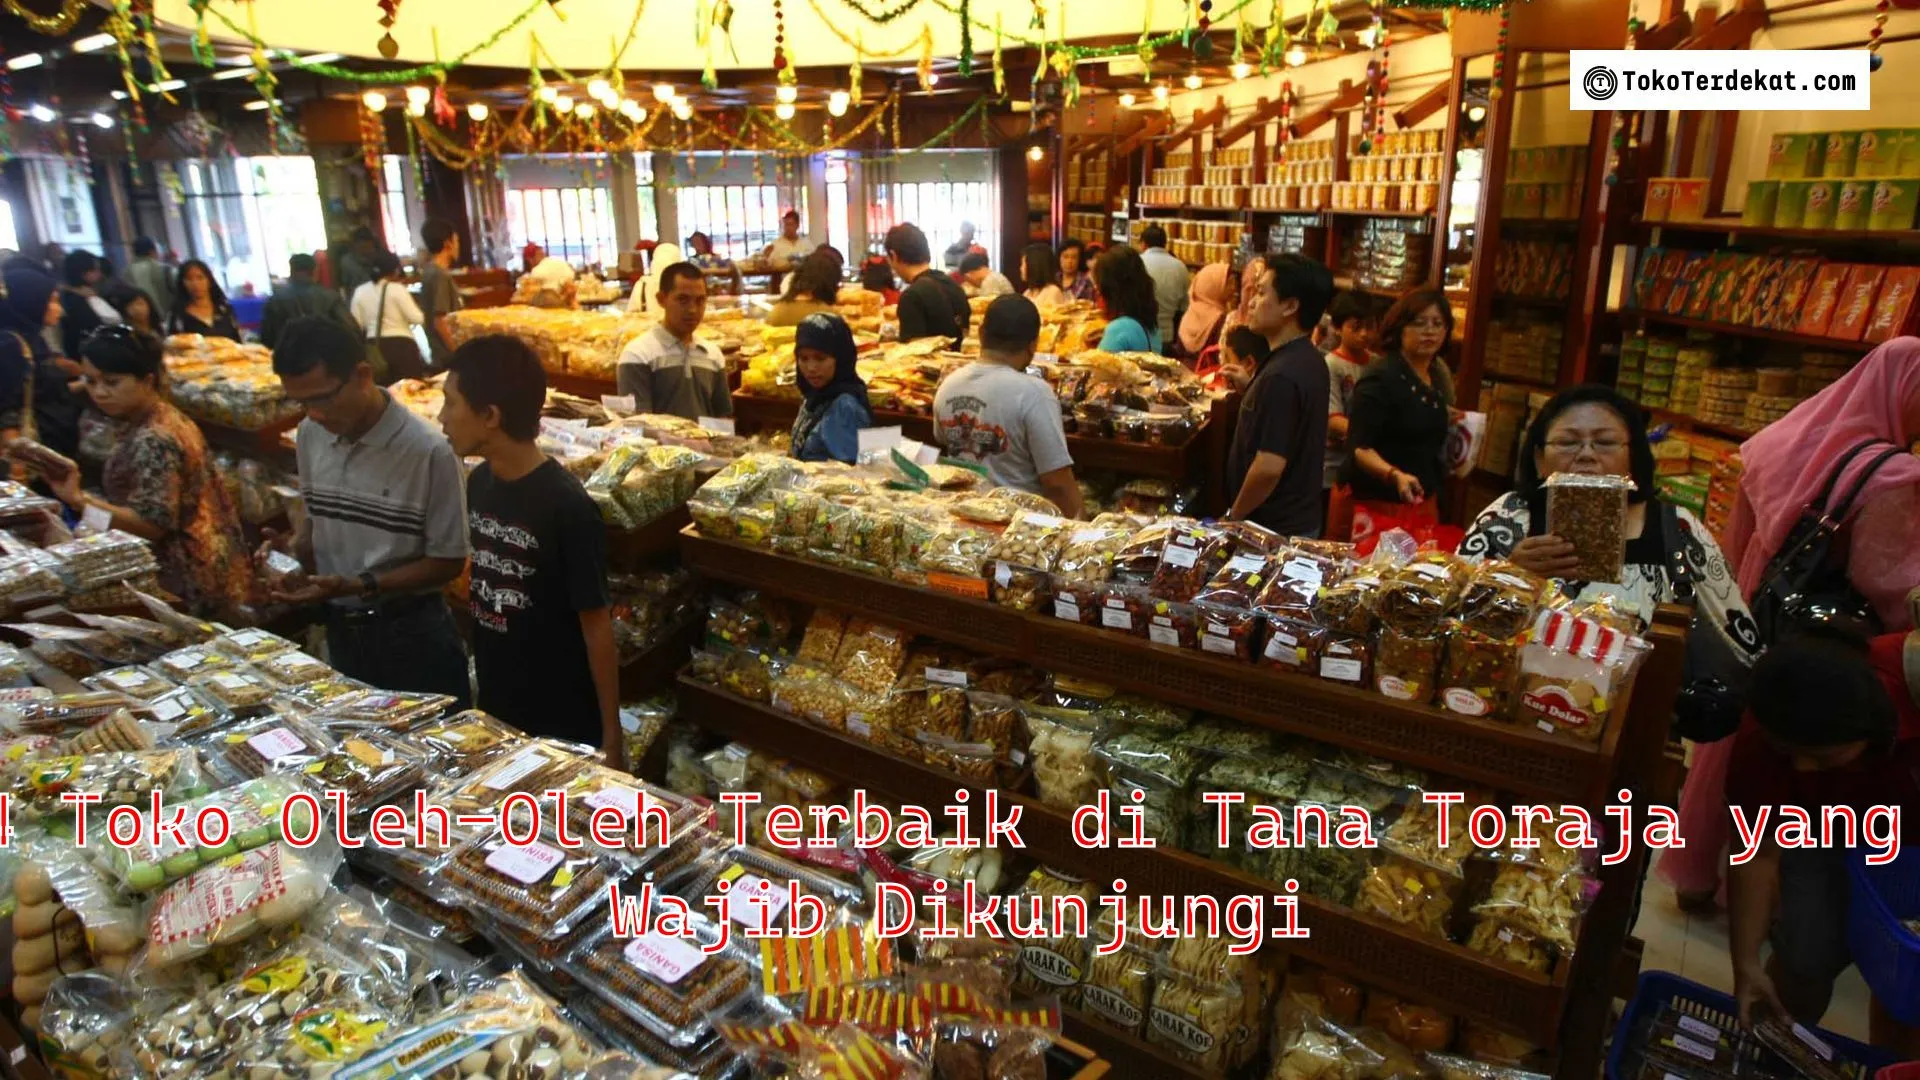 4 Toko Oleh-Oleh Terbaik di Tana Toraja yang Wajib Dikunjungi